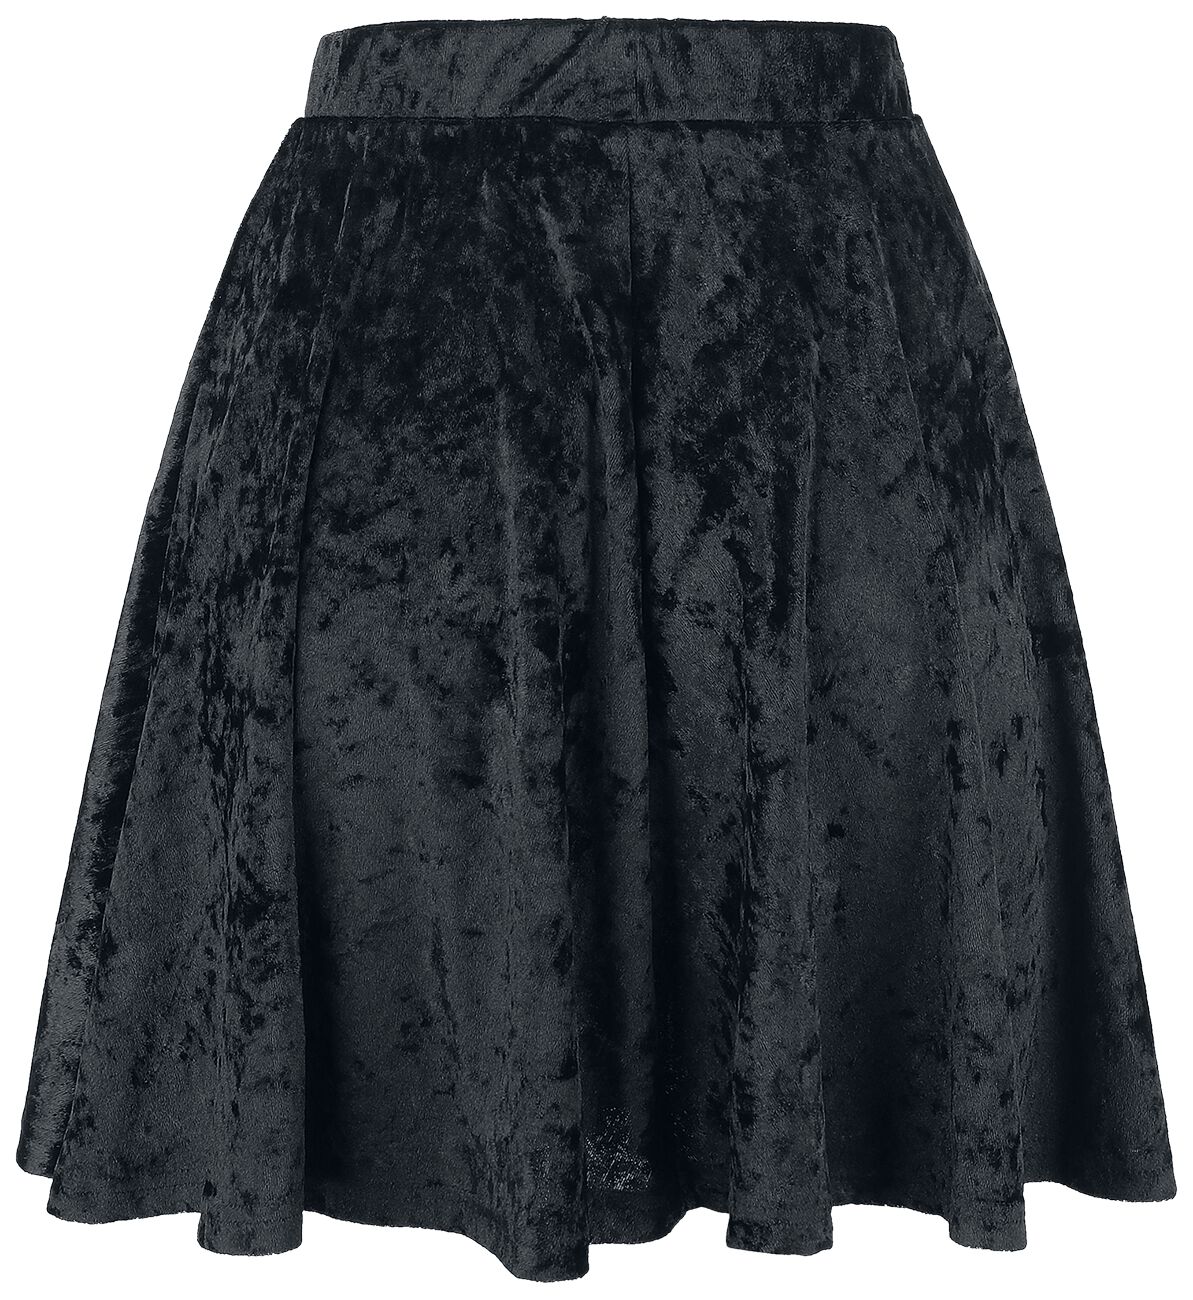 Image of Minigonna Gothic di Forplay - Velvet Skirt - S a XL - Donna - nero